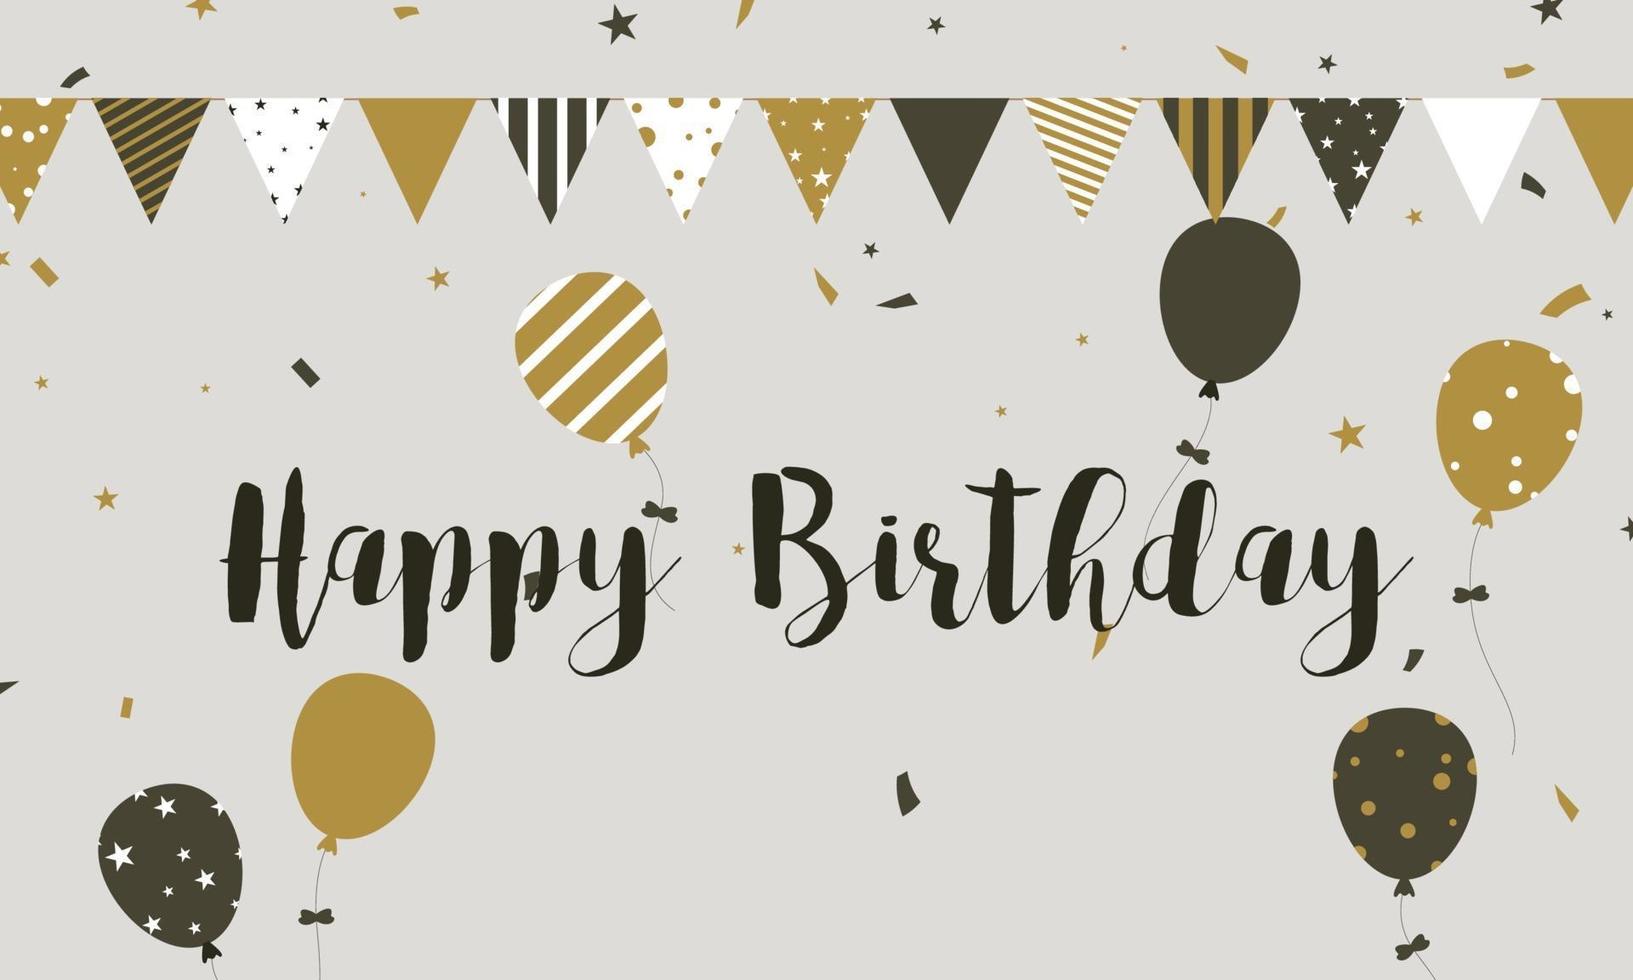 Happy Birthday banner celebration background vector